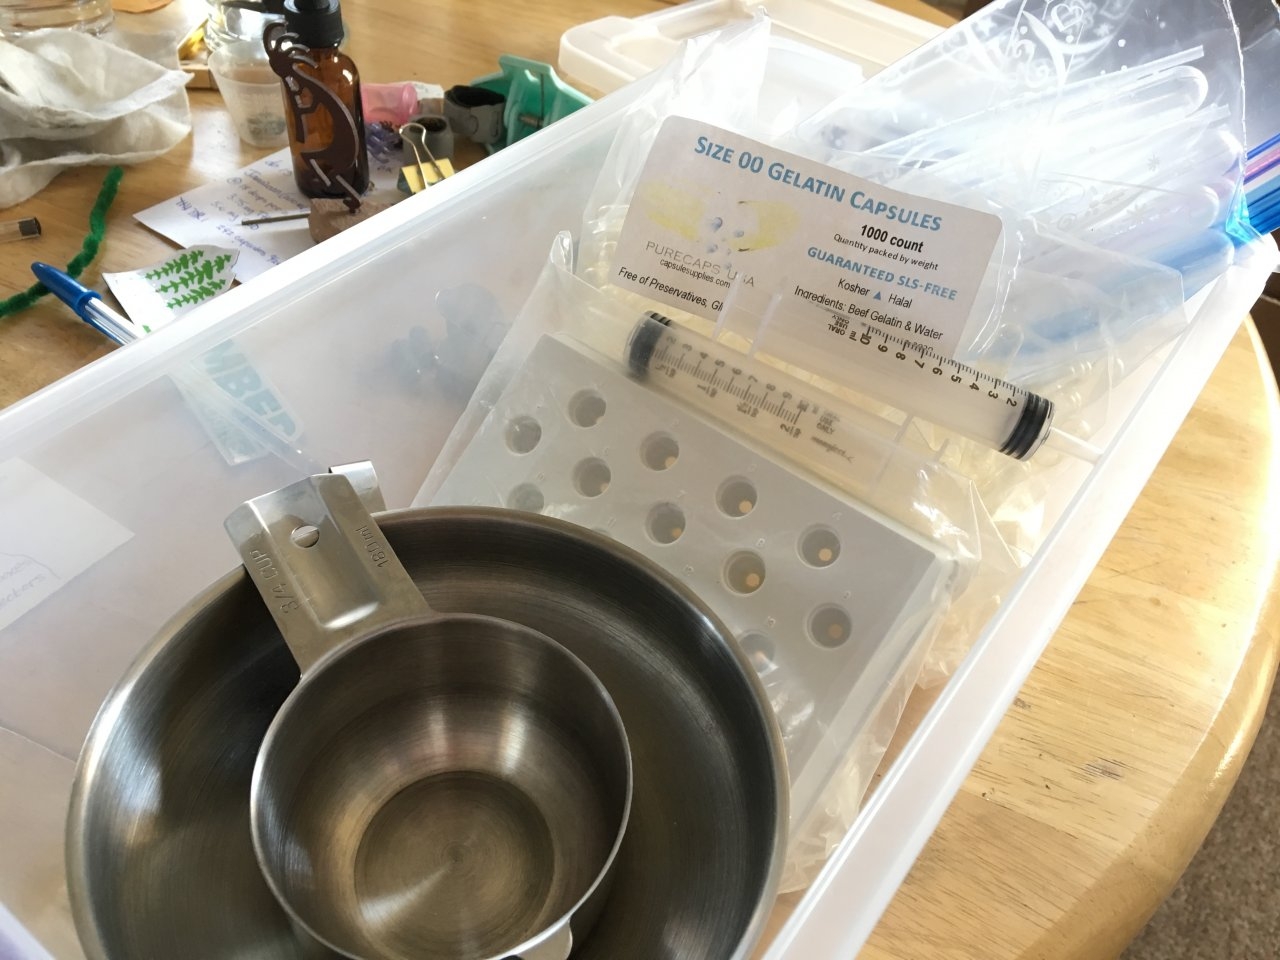 Capsule-making kit for the daughter